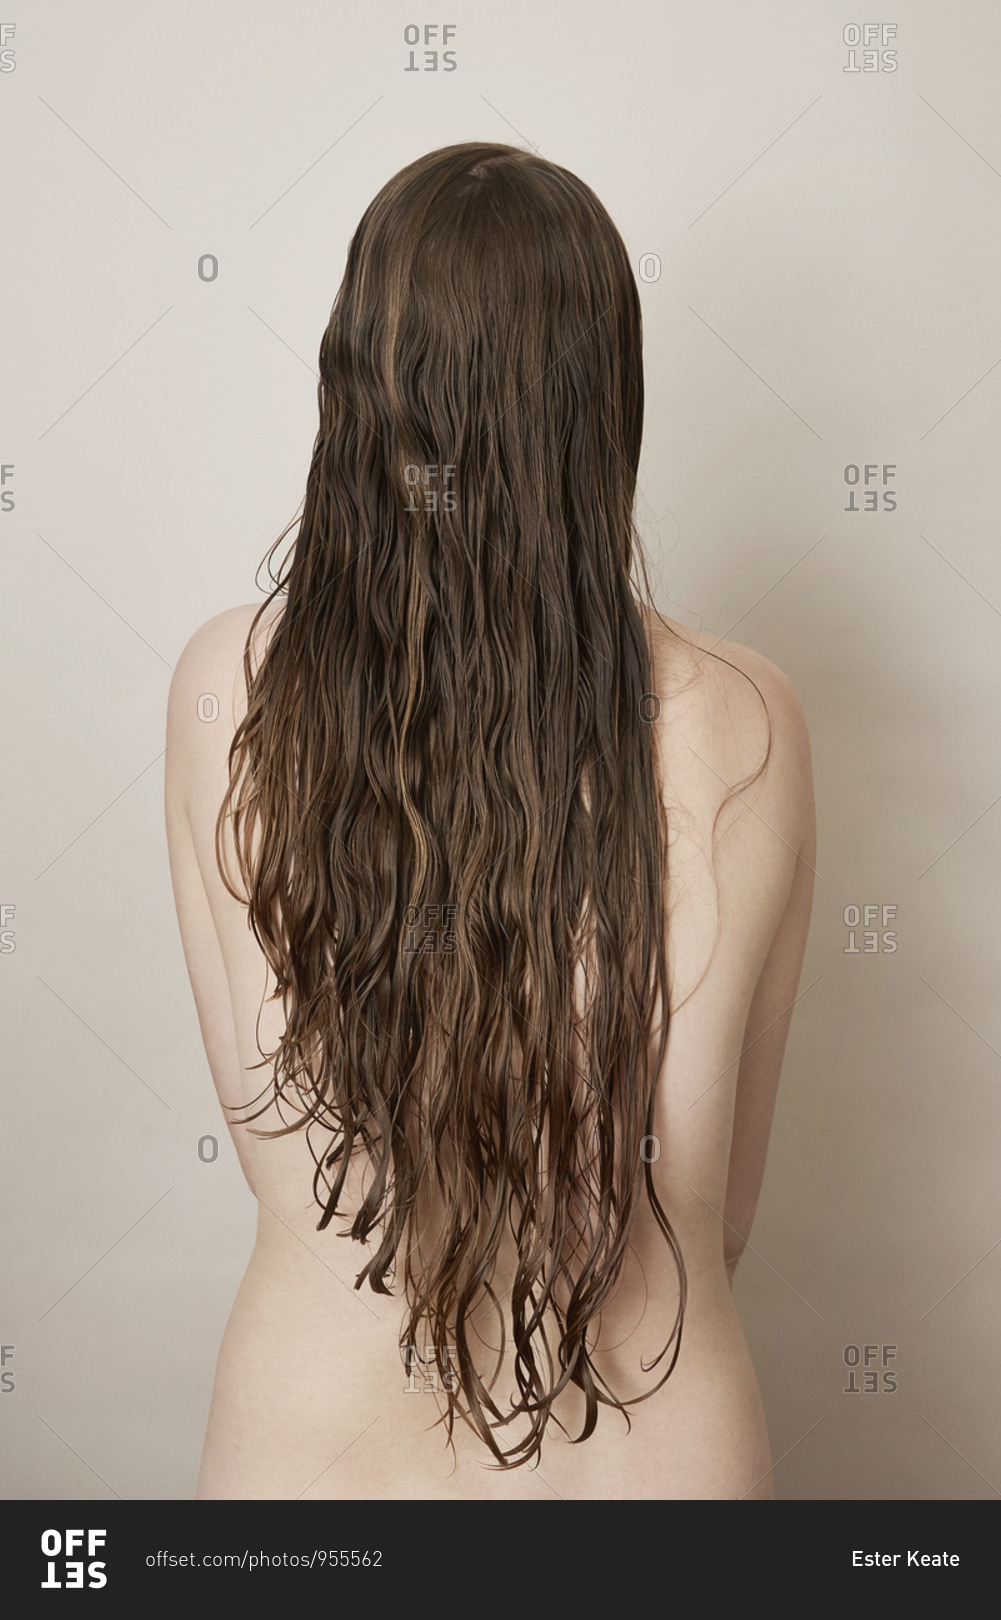 ahmed meezo add big hair nudes photo